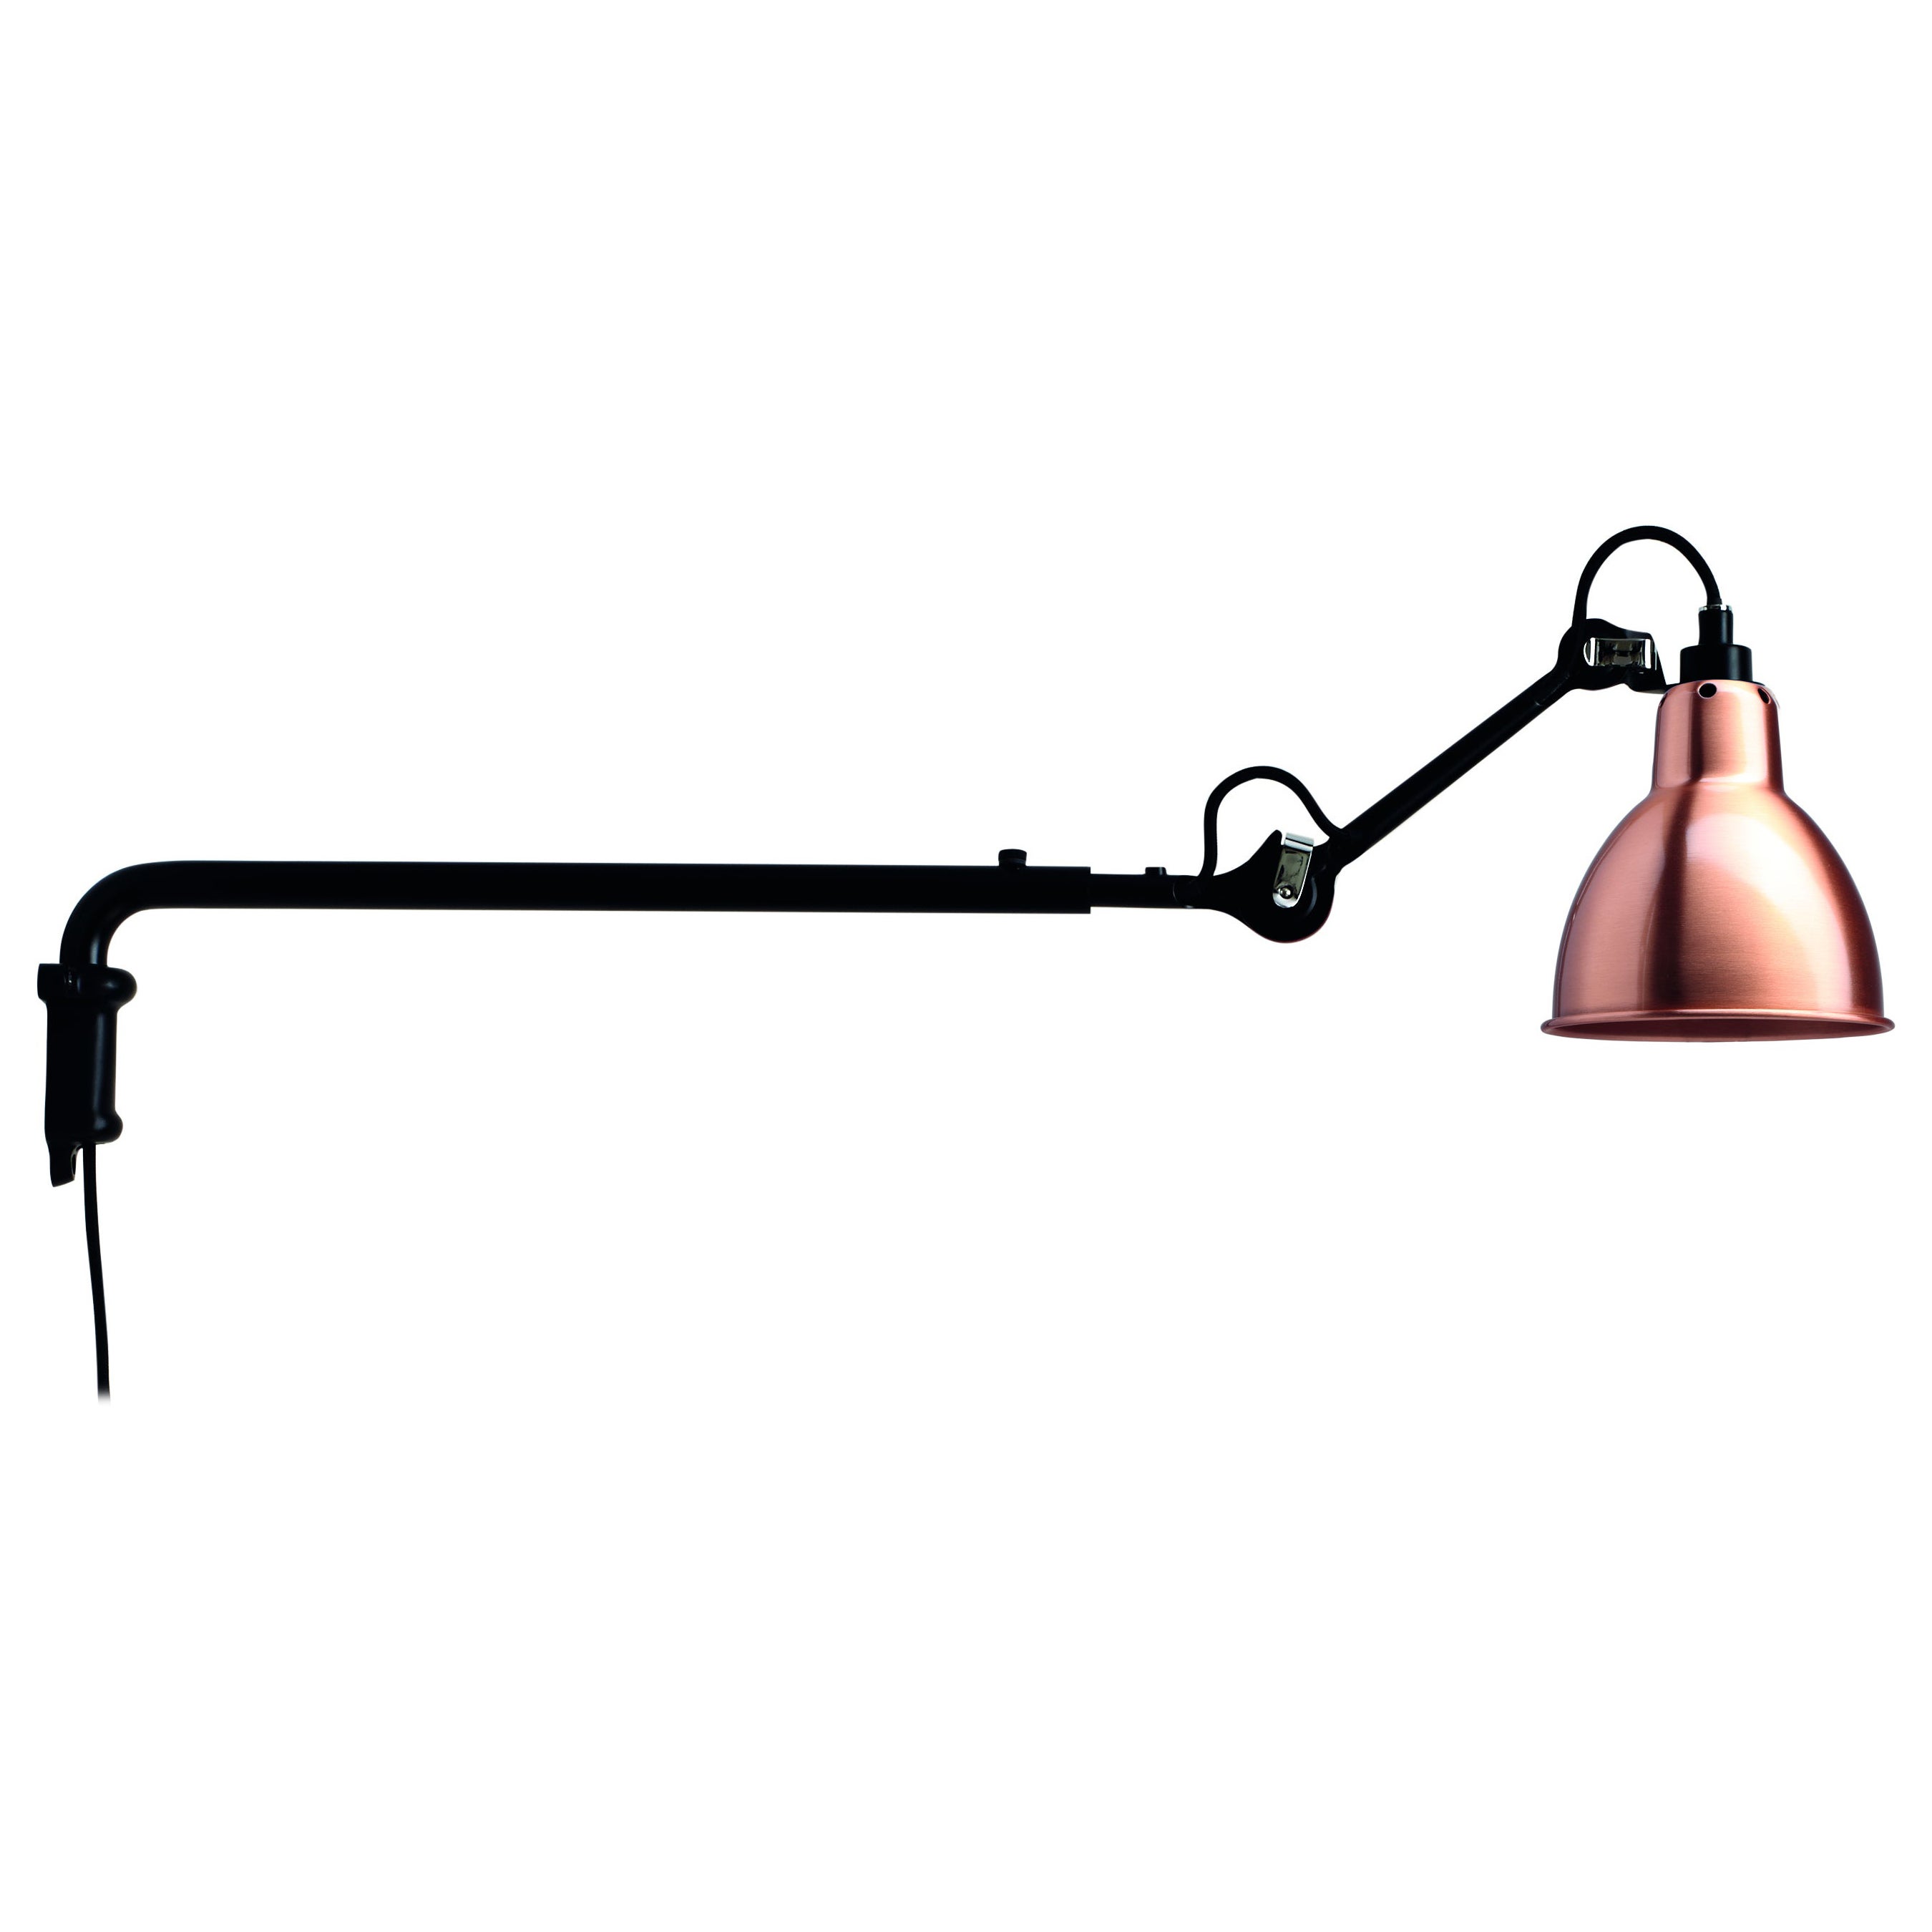 DCW Editions La Lampe Gras N°203 Wall Lamp in Black Arm & Black Copper Shade